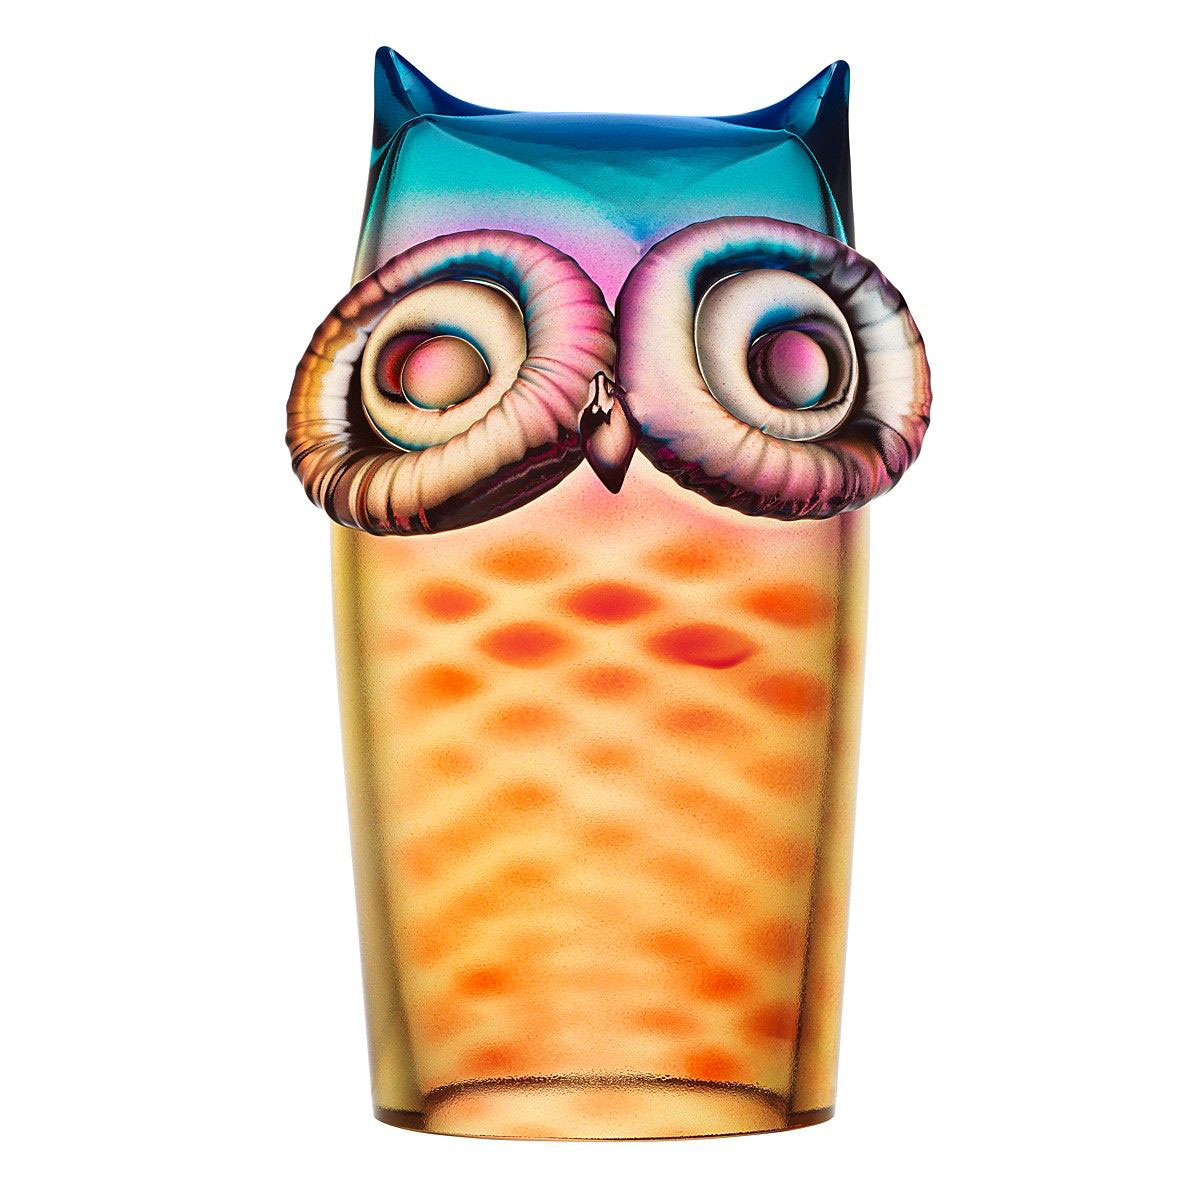 Obegi Home Accessories Kosta Boda My Wide Life Owl Sculpture